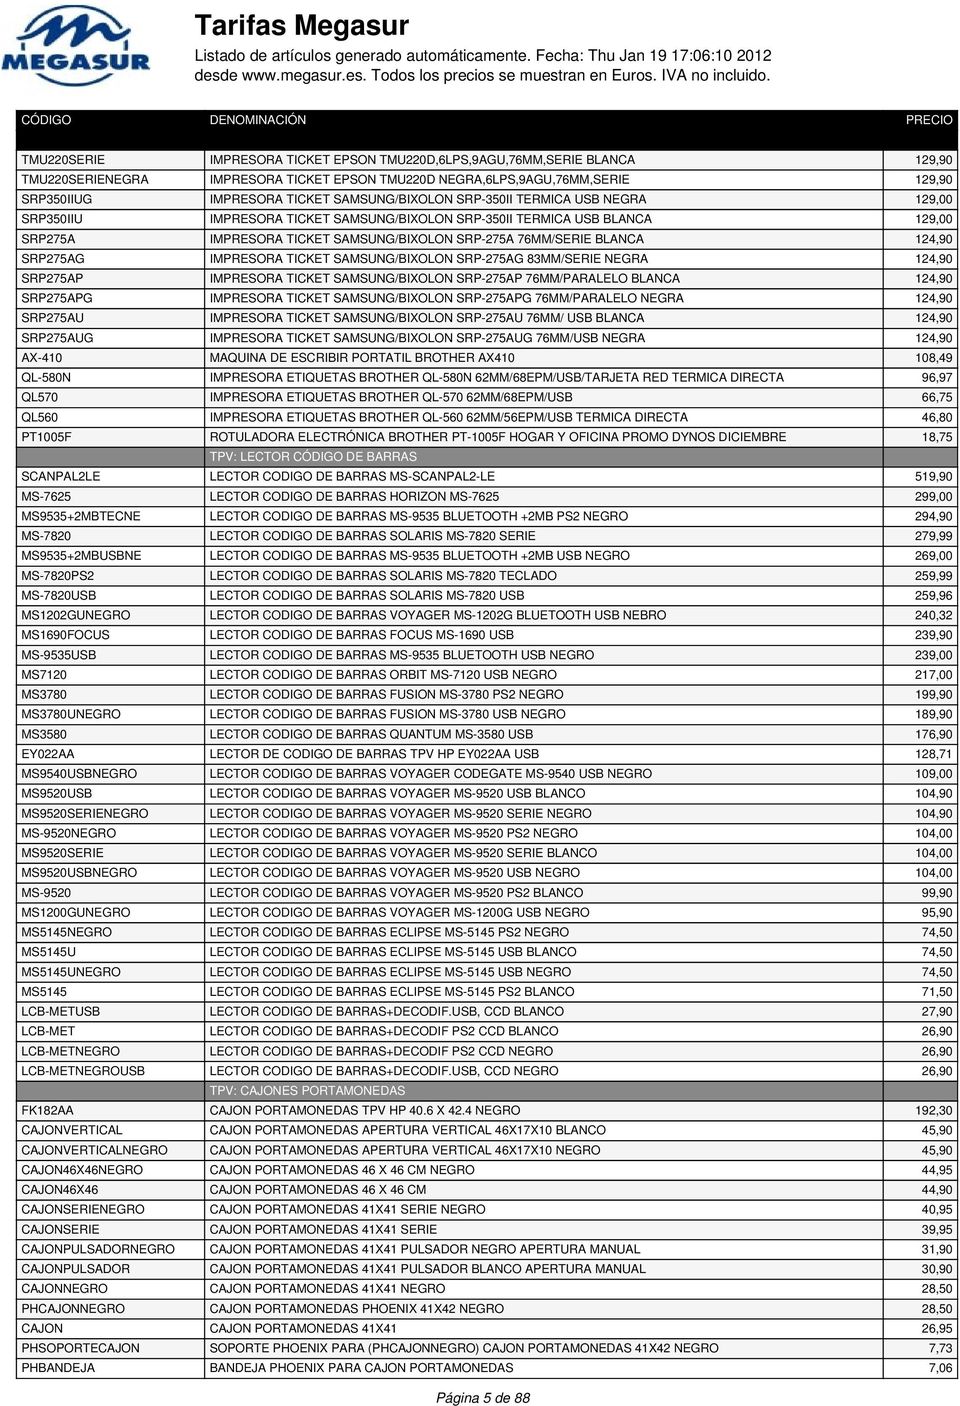 IMPRESORA TICKET EPSON TMU220D NEGRA,6LPS,9AGU,76MM,SERIE 129,90 SRP350IIUG IMPRESORA TICKET SAMSUNG/BIXOLON SRP-350II TERMICA USB NEGRA 129,00 SRP350IIU IMPRESORA TICKET SAMSUNG/BIXOLON SRP-350II